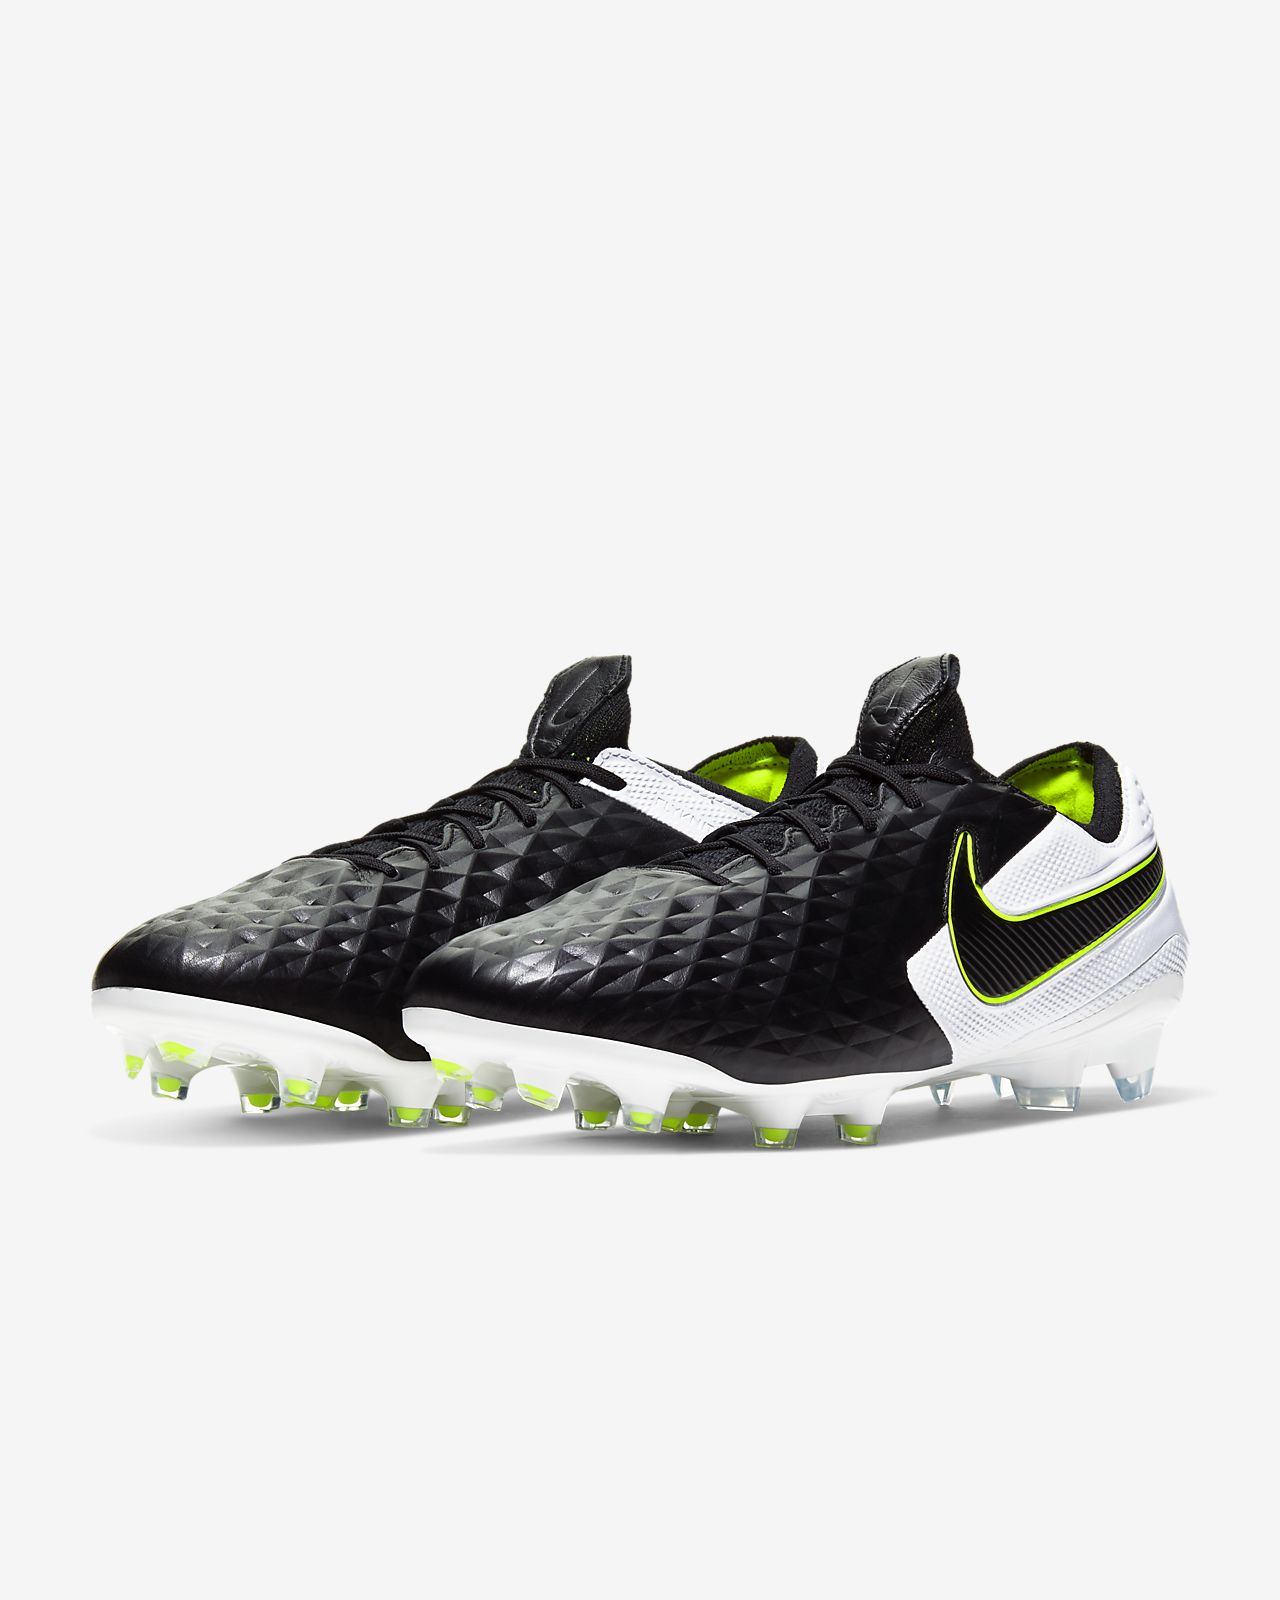 Nike React Legend 8 Pro IC RGOL.com Football boots.